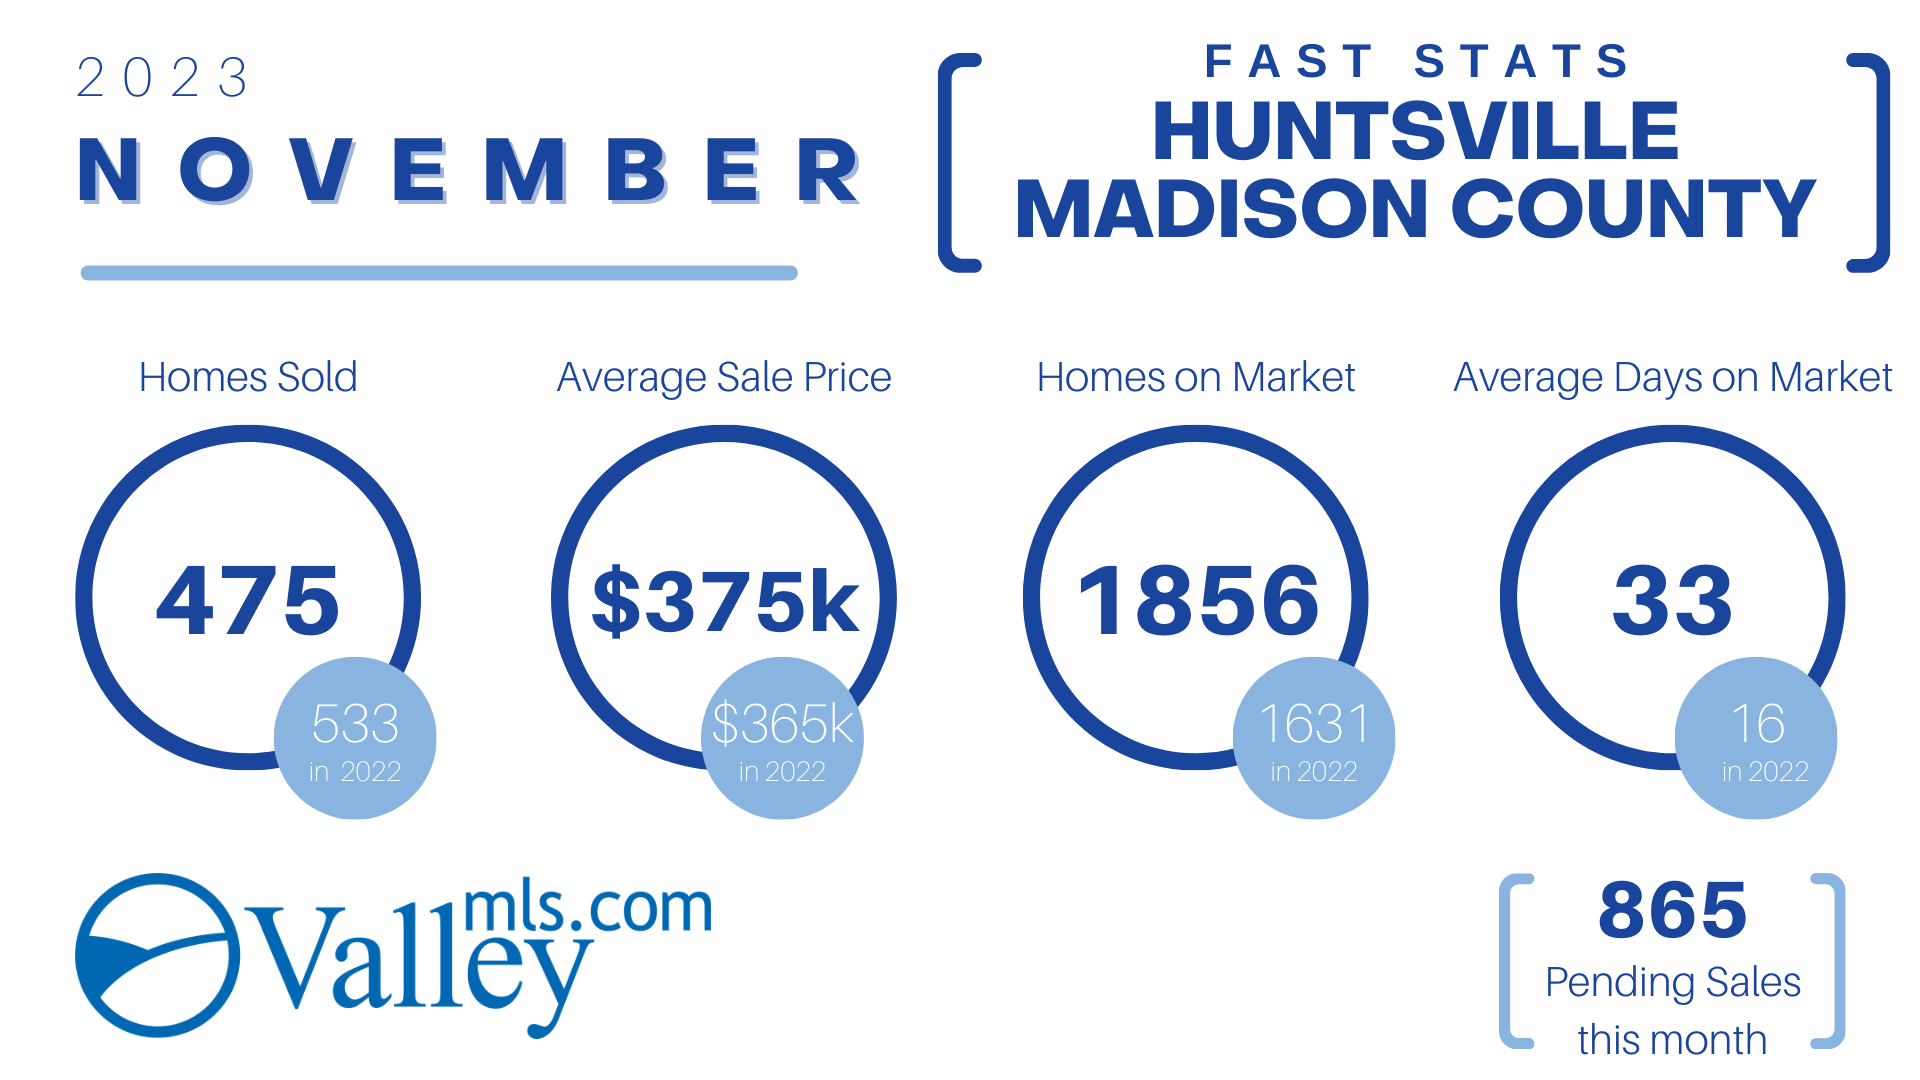 HUNTSVILLE_Madison County Fast Stats